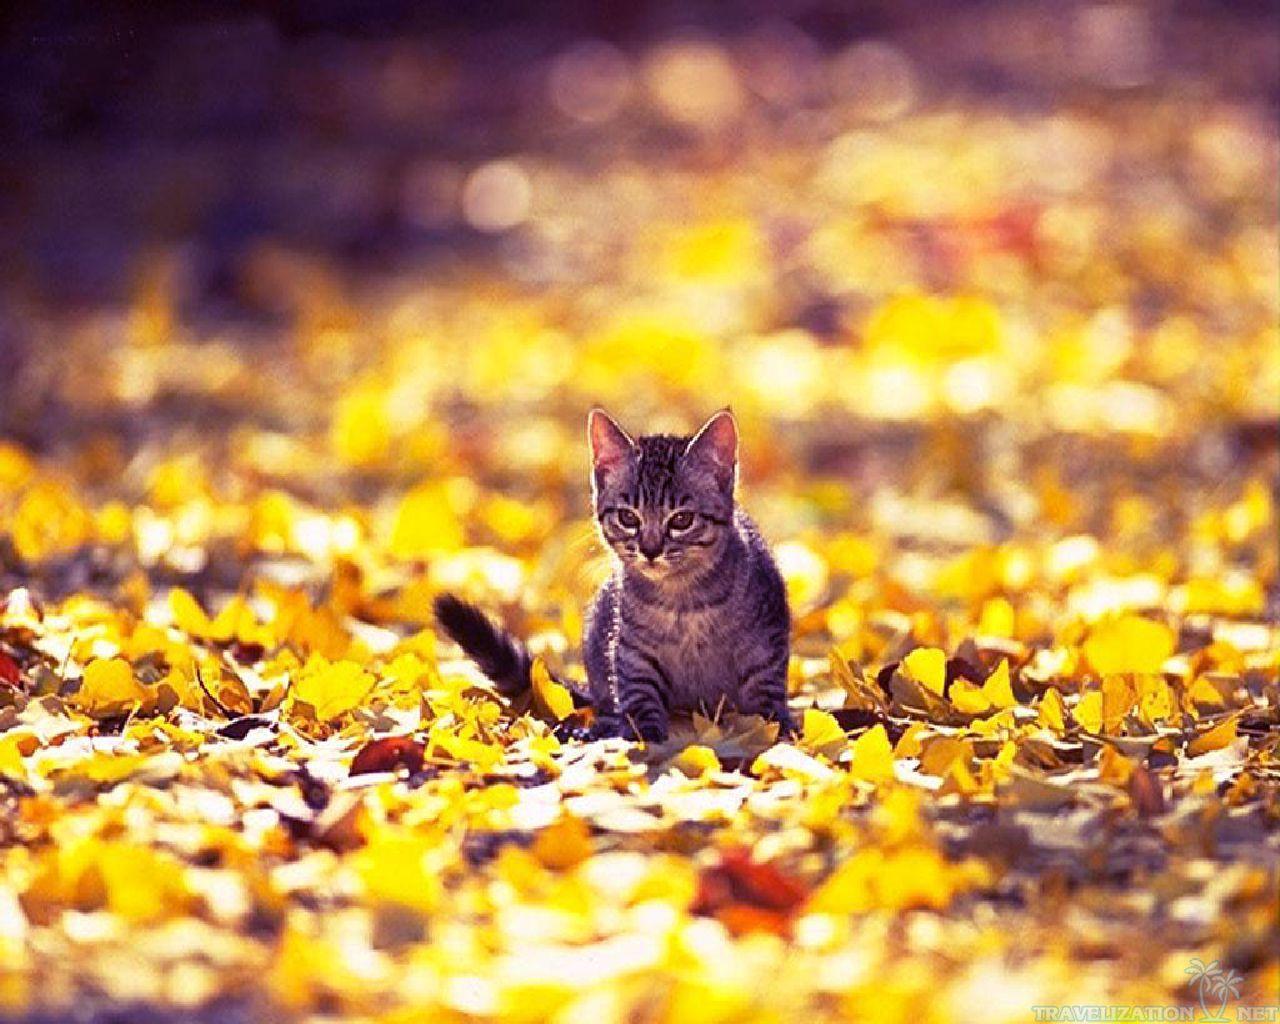 Fall Cat Wallpapers - Top Free Fall Cat Backgrounds - WallpaperAccess